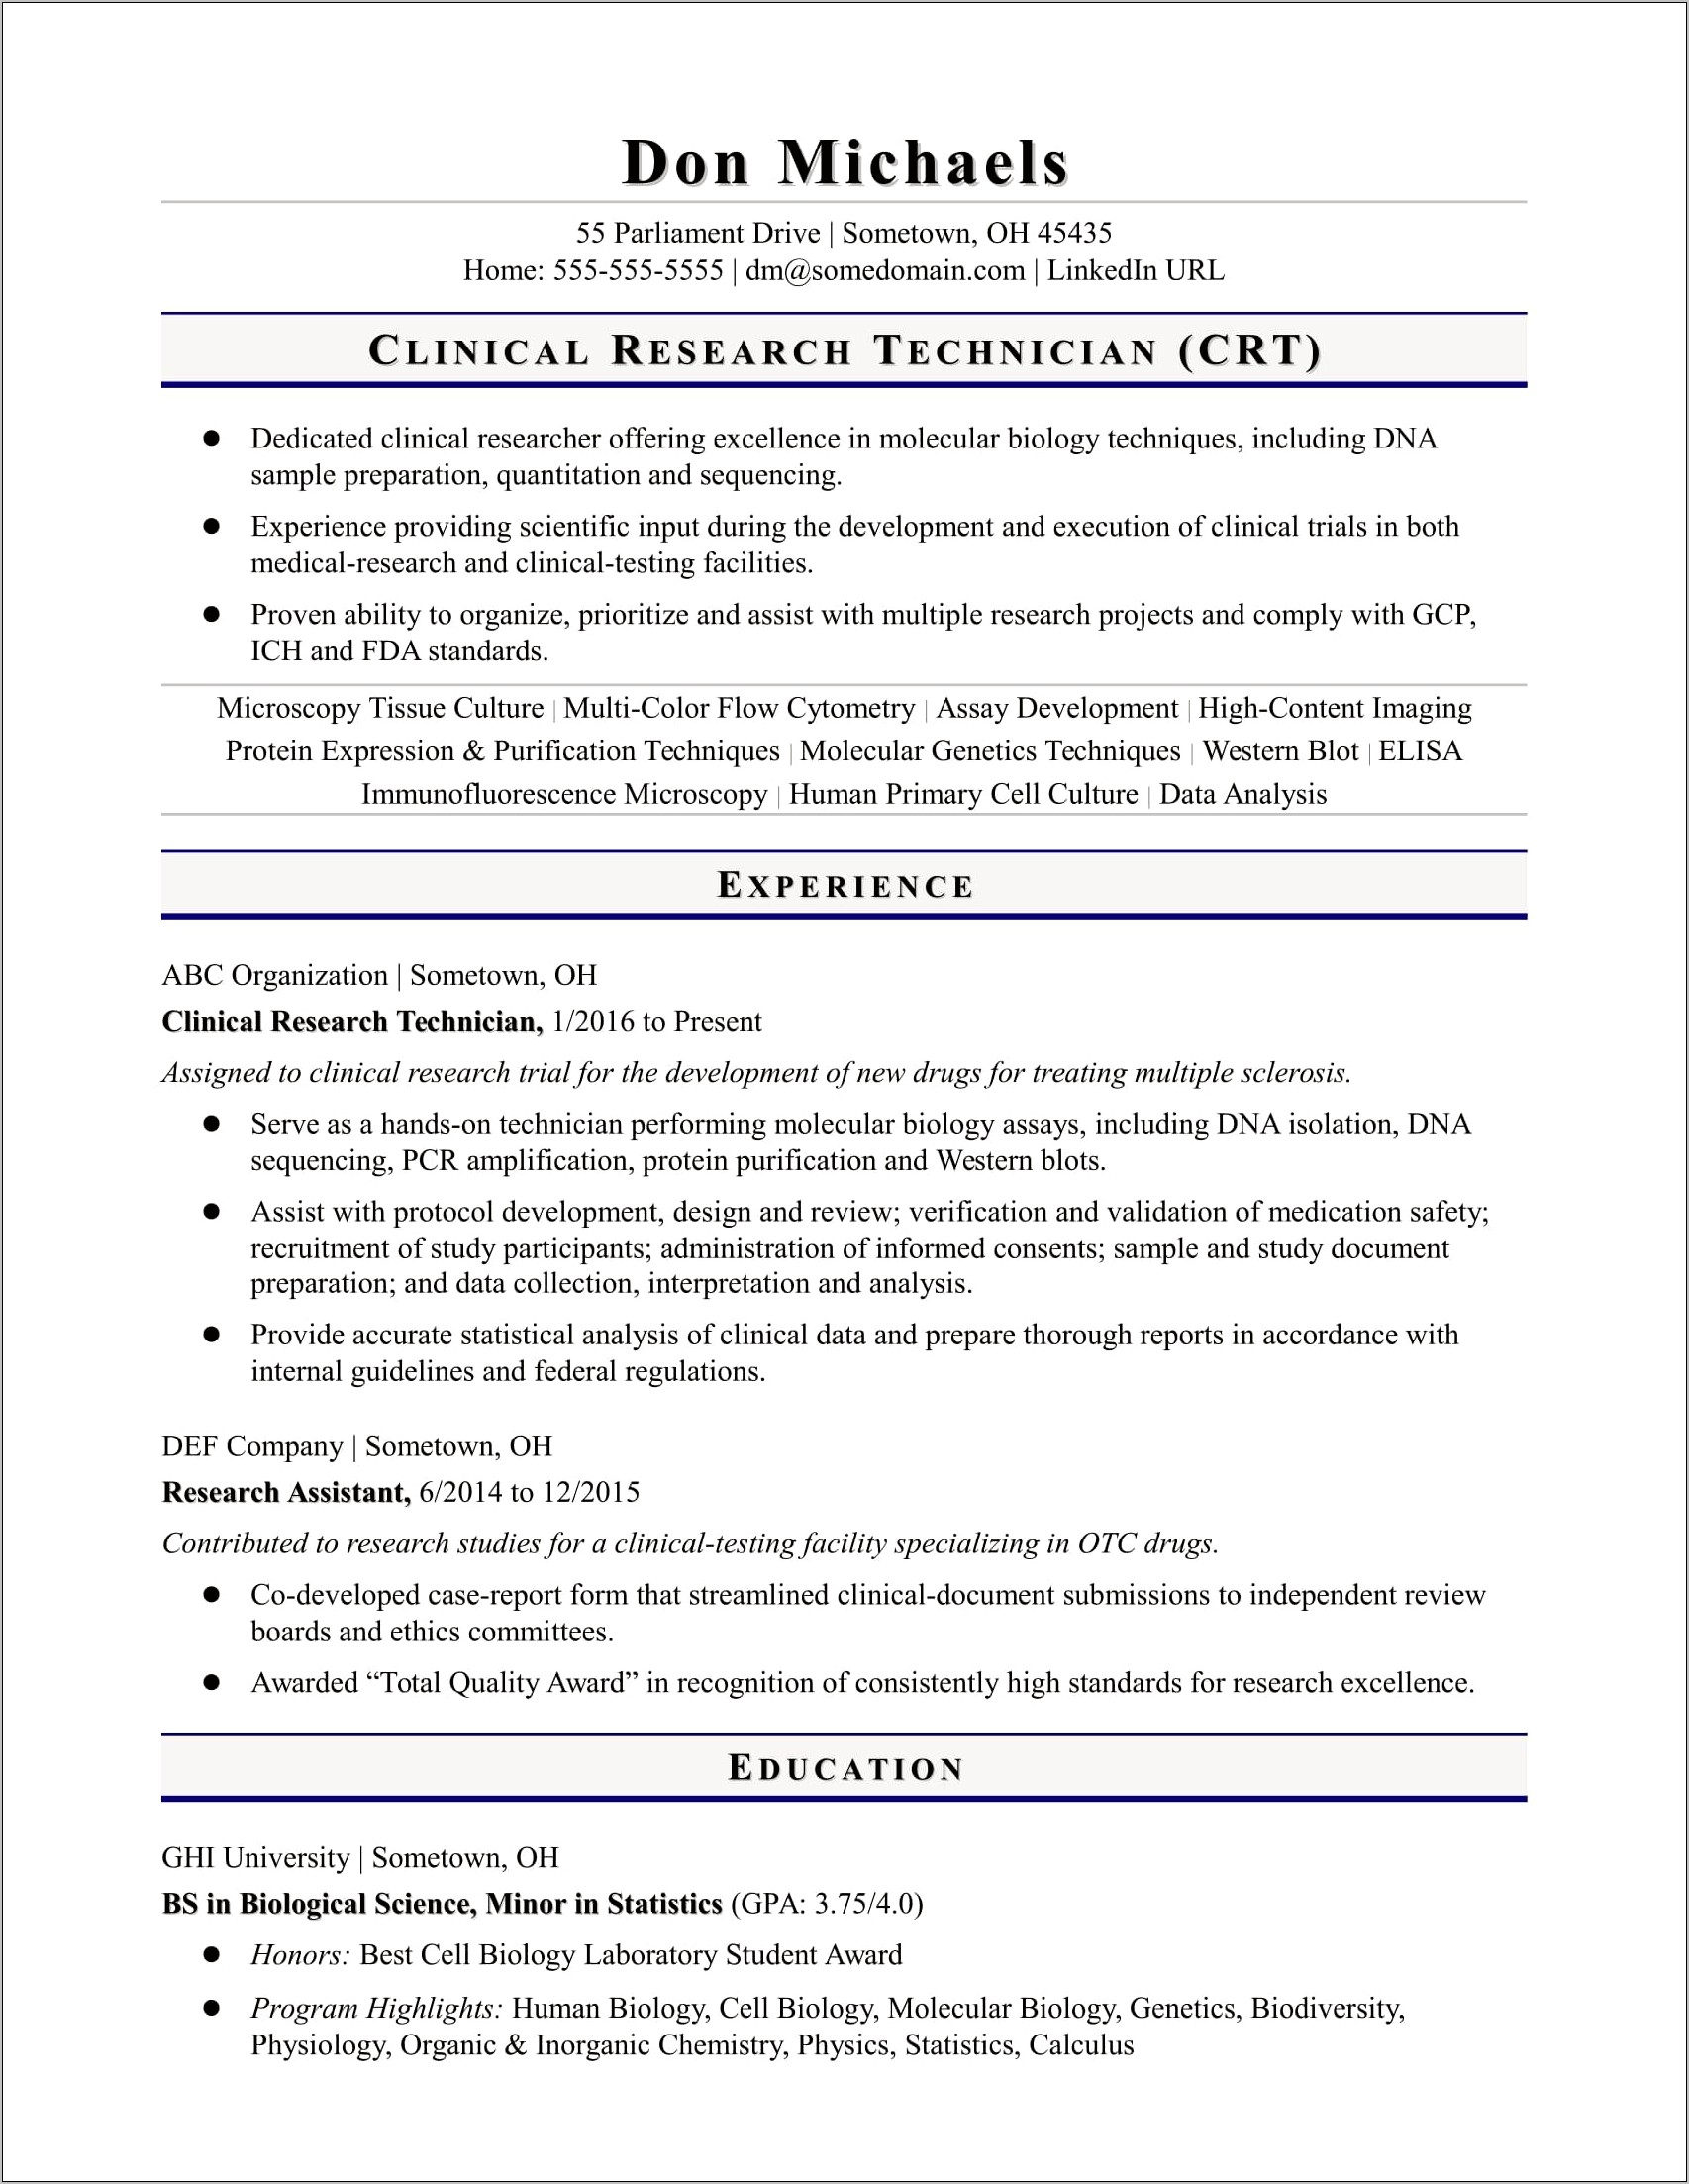 Resume Work Experience Responsibilitiesbiology Sample Phd Level